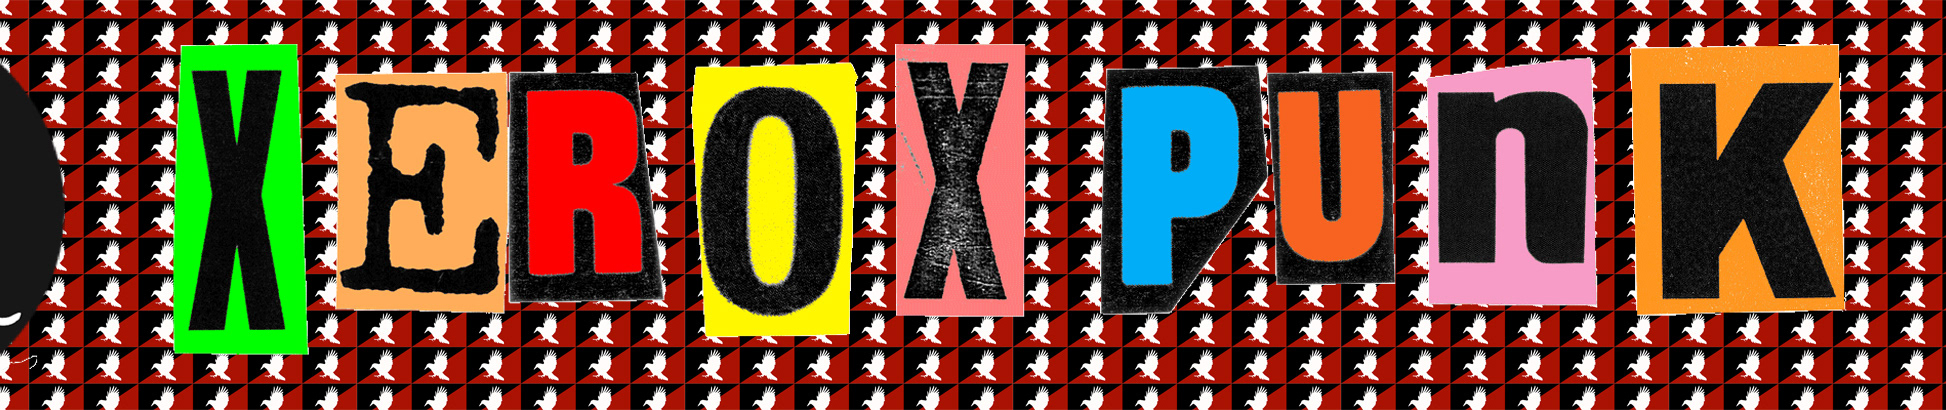 xerox punk's profile banner